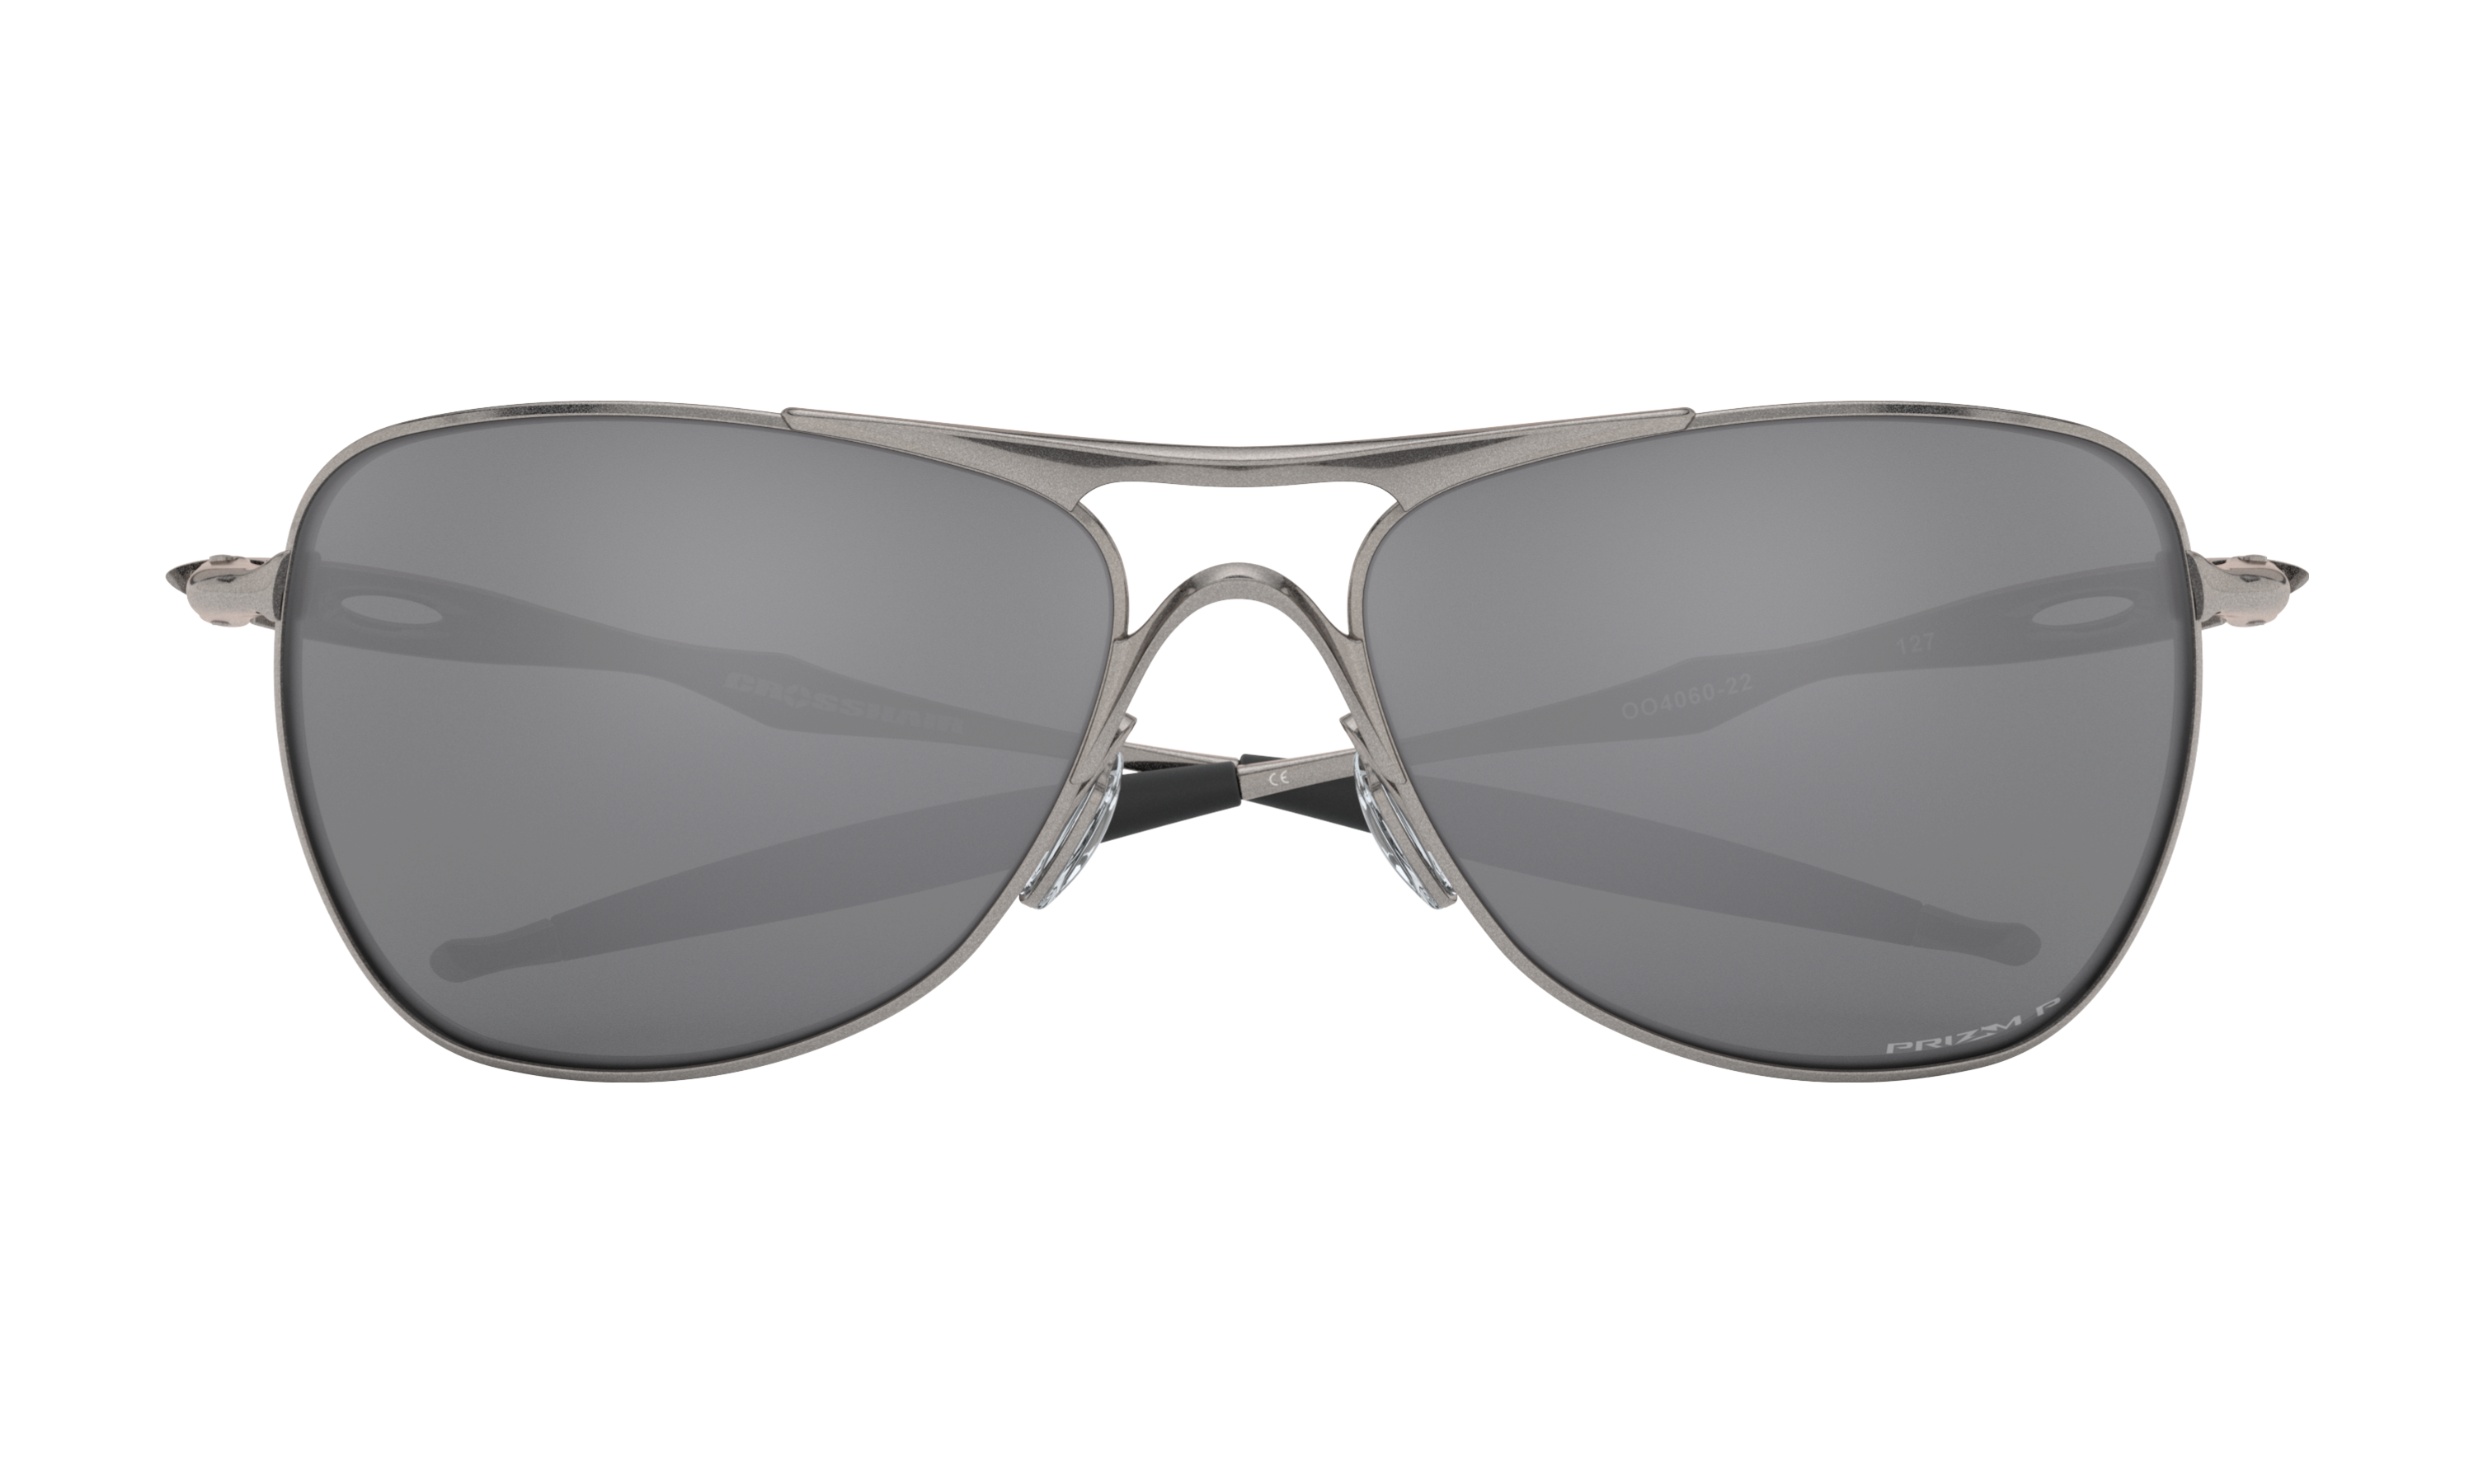 oakley crosshair aviator sunglasses